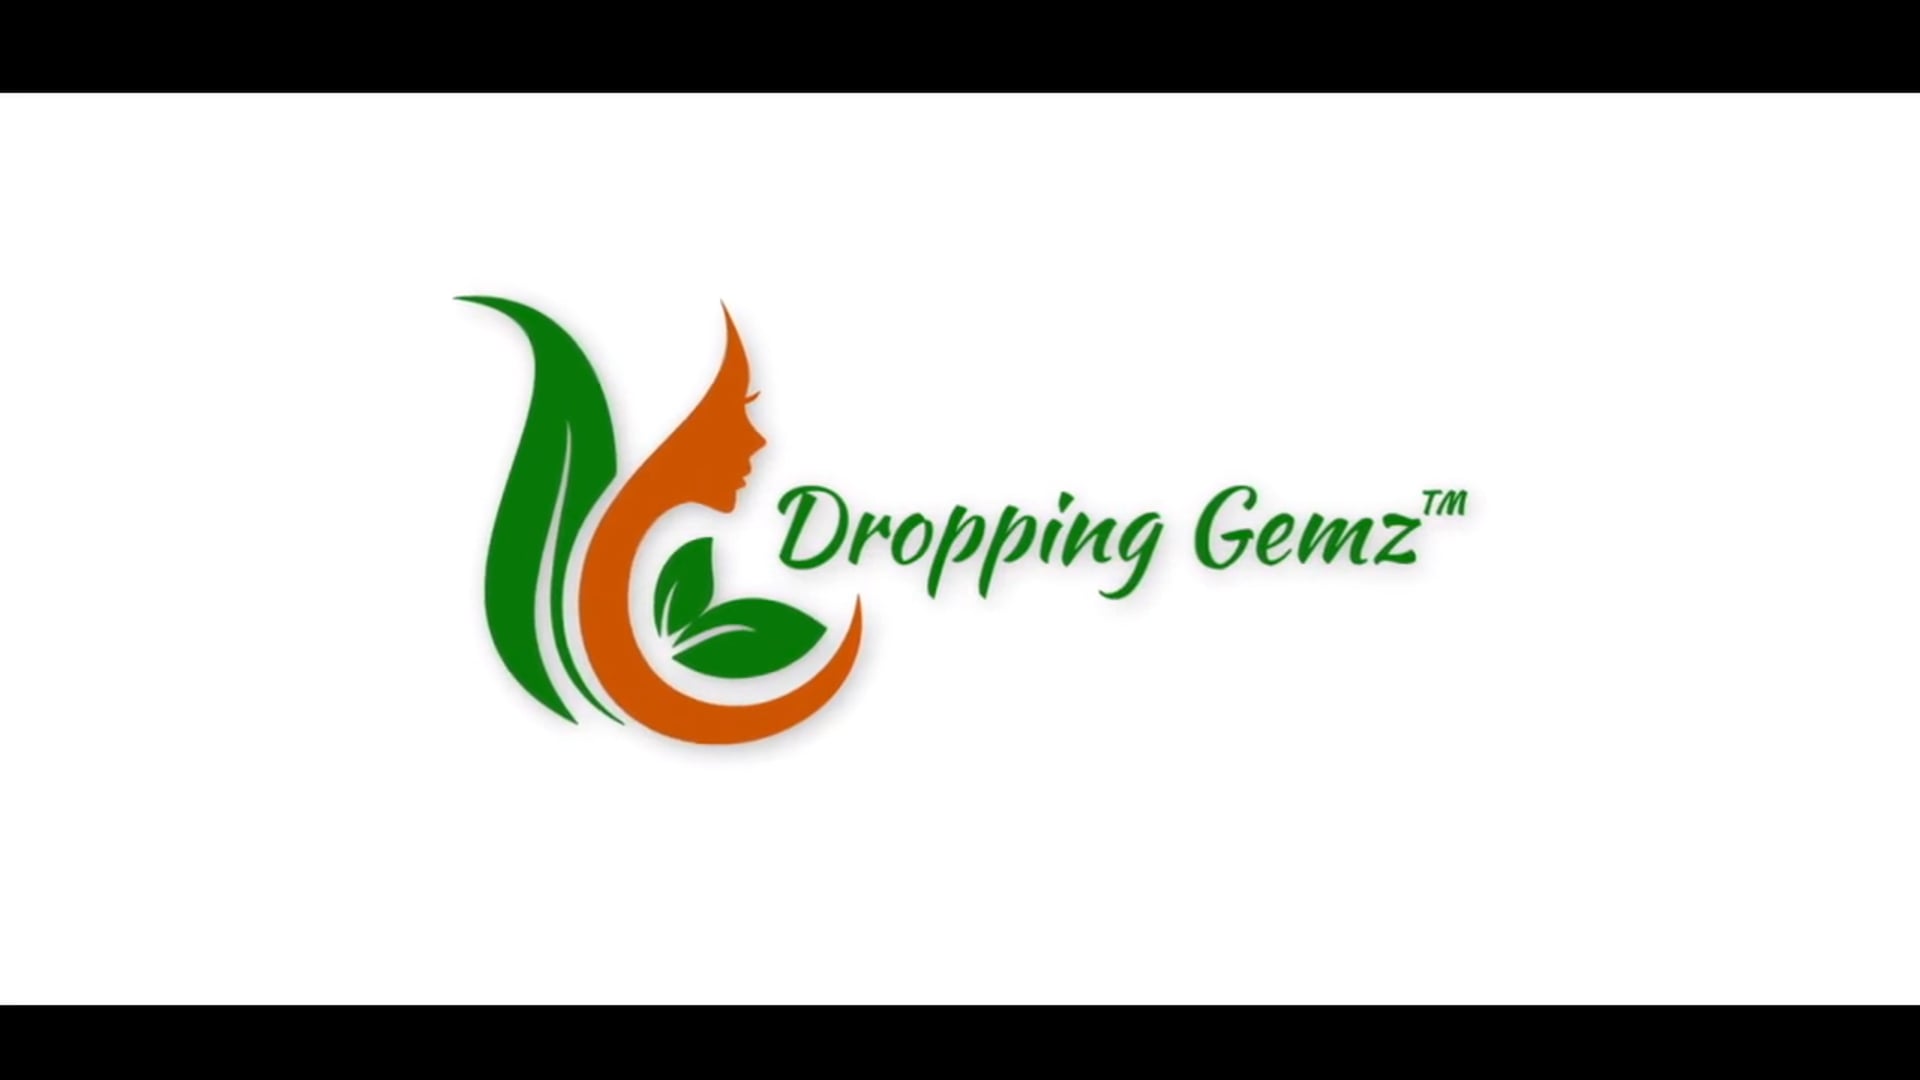 Dropping Gemz Promo